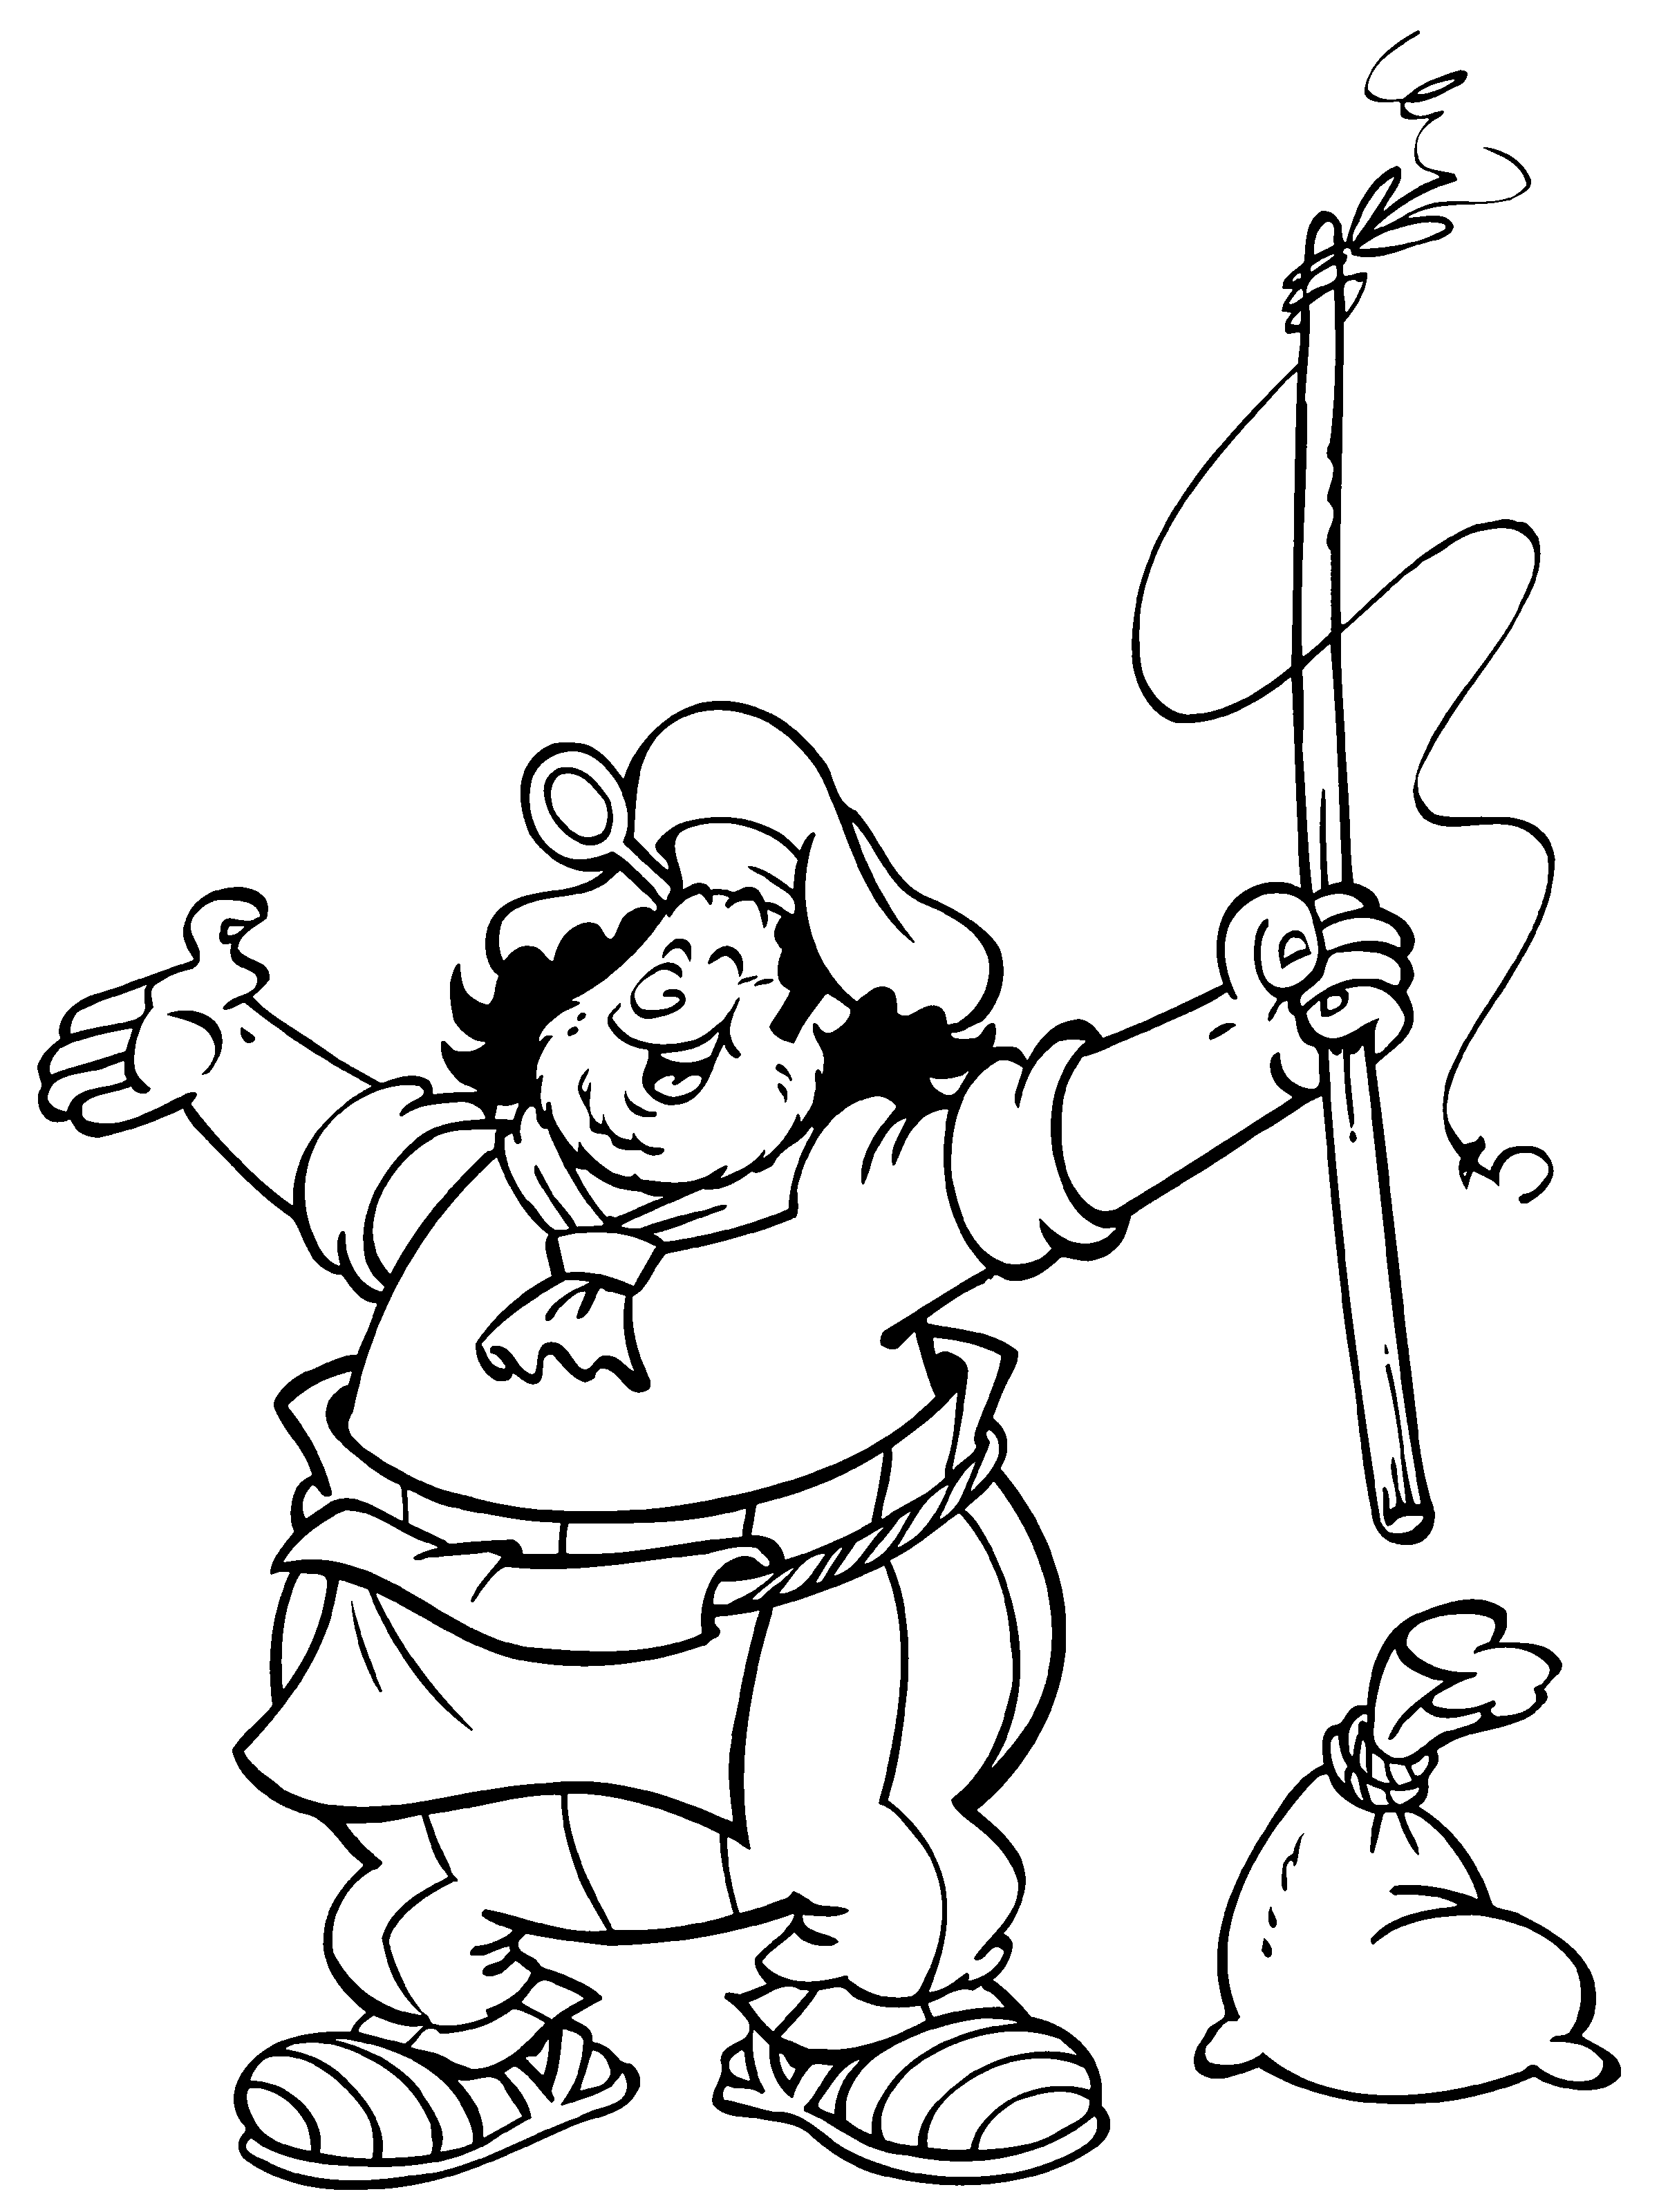 Piet pirate coloriages